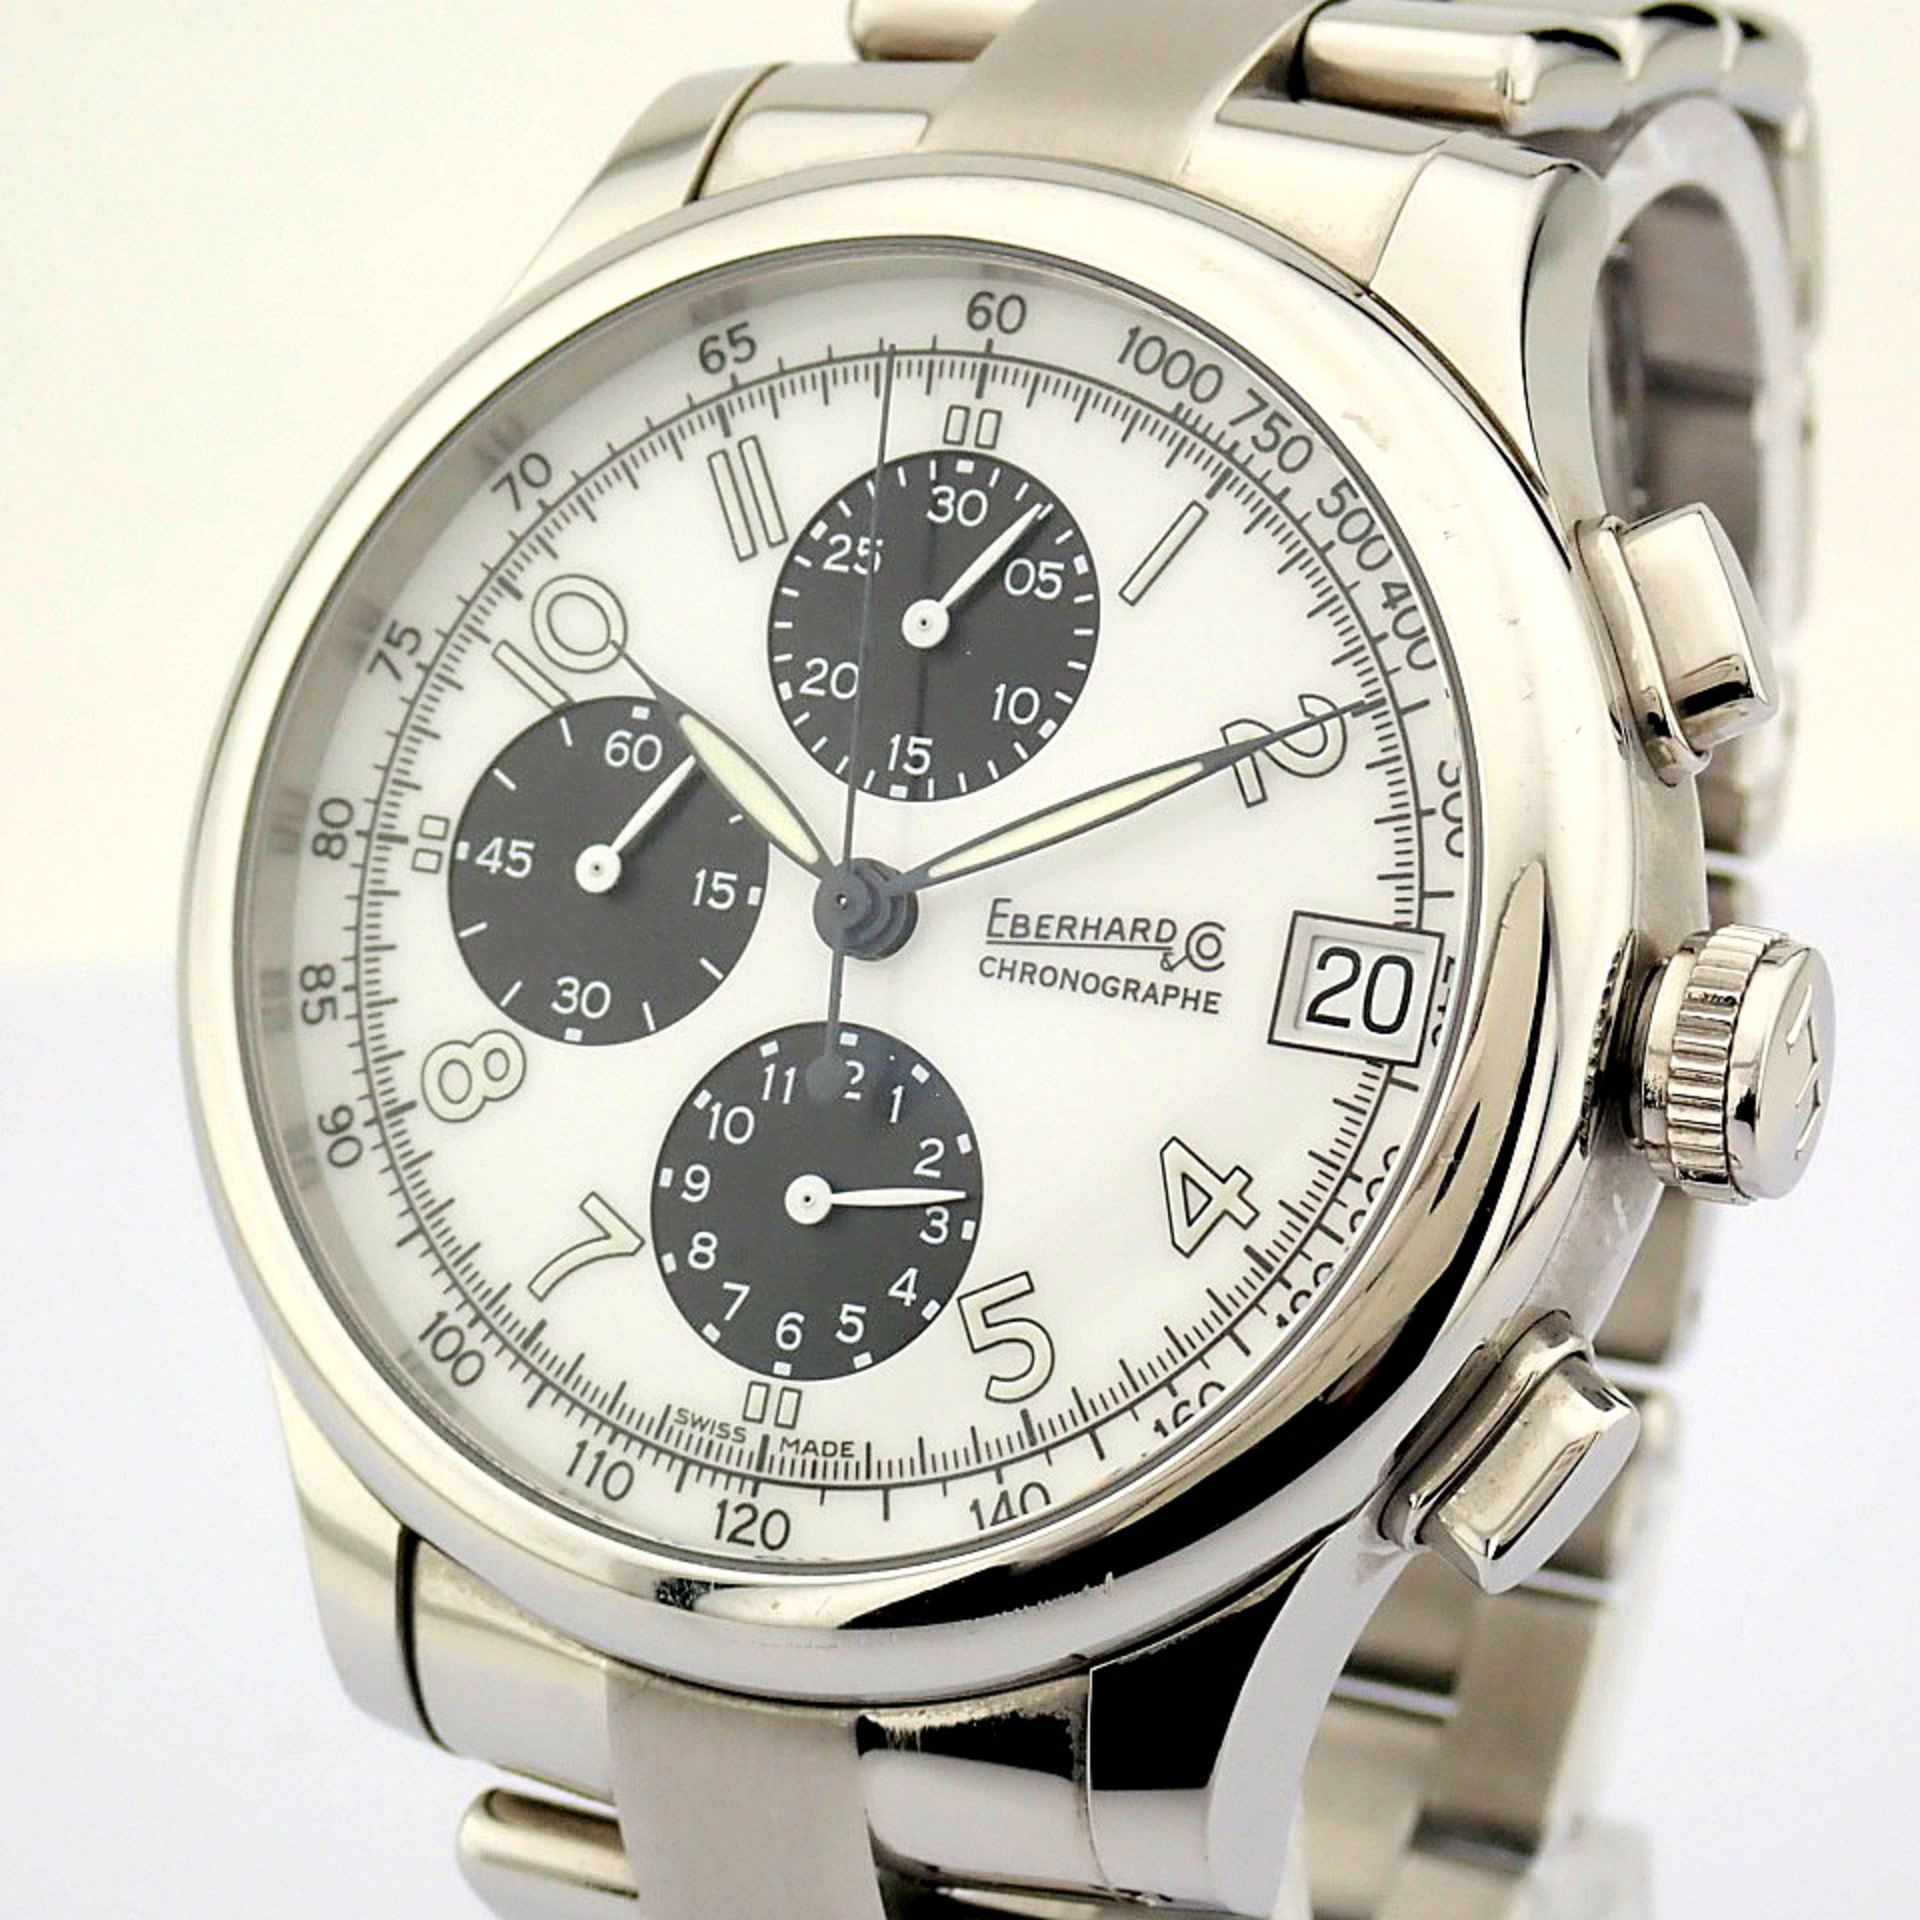 Eberhard & Co. / Traversetolo Chronograph Automatic - Gentlmen's Steel Wrist Watch - Image 5 of 11